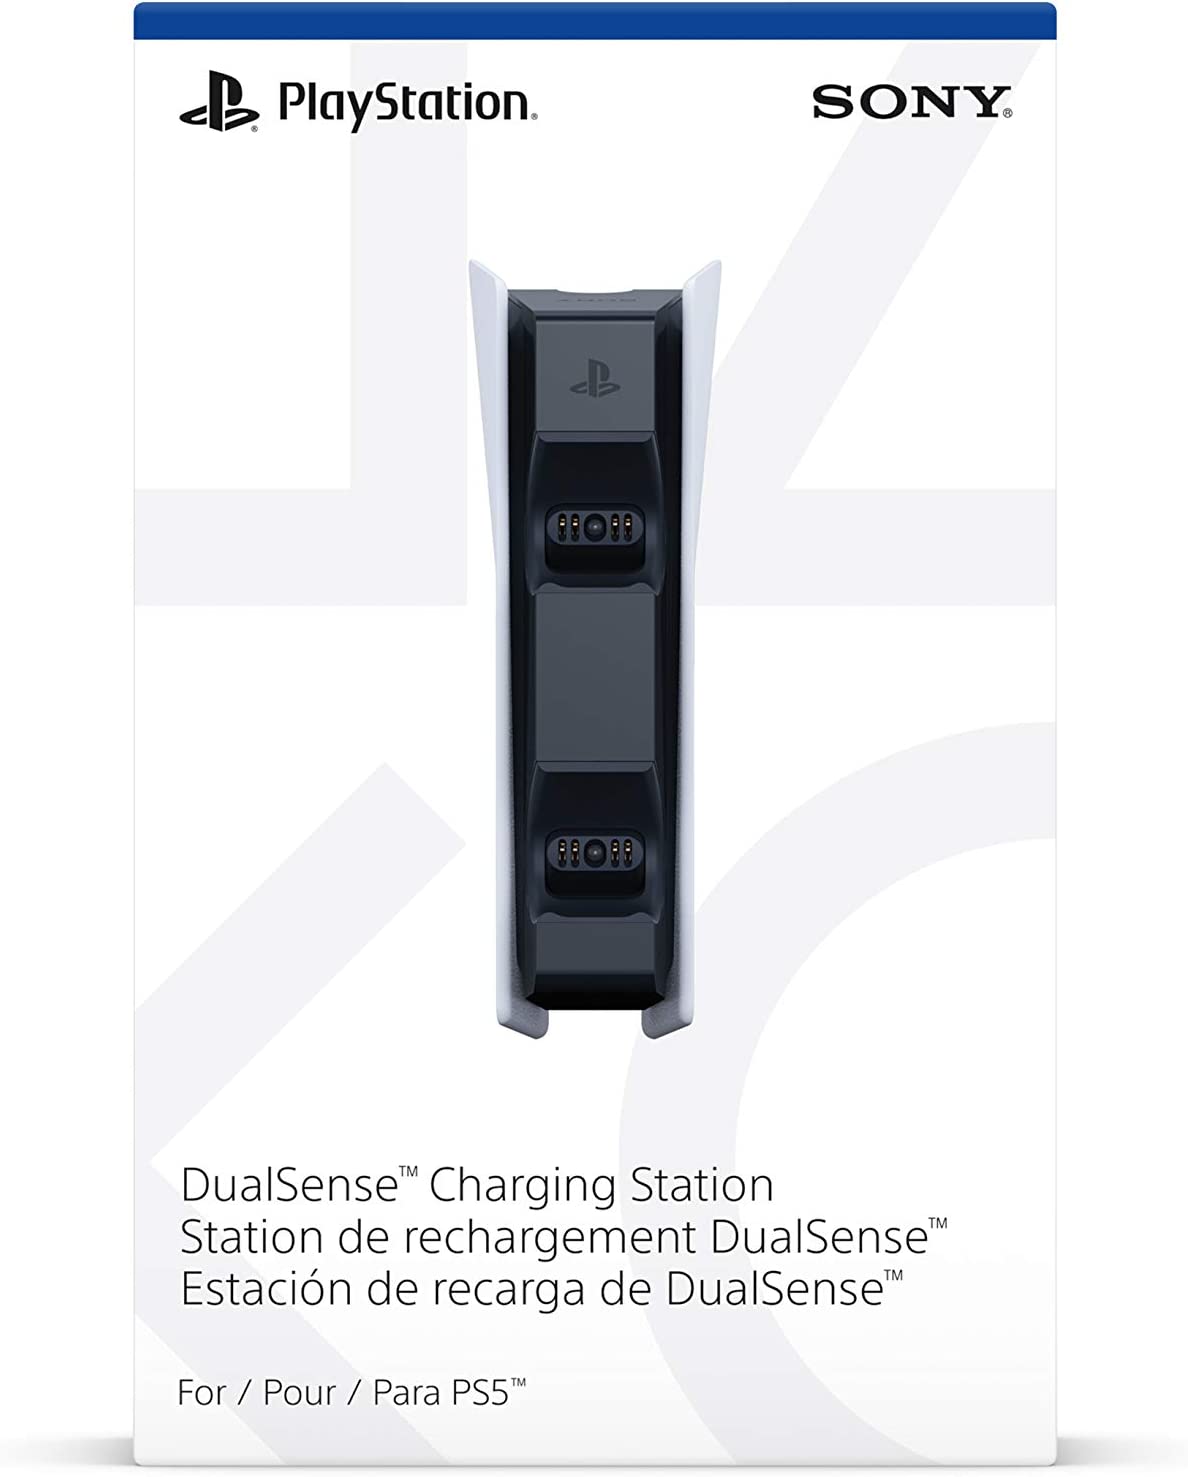 DualSense Charging Station